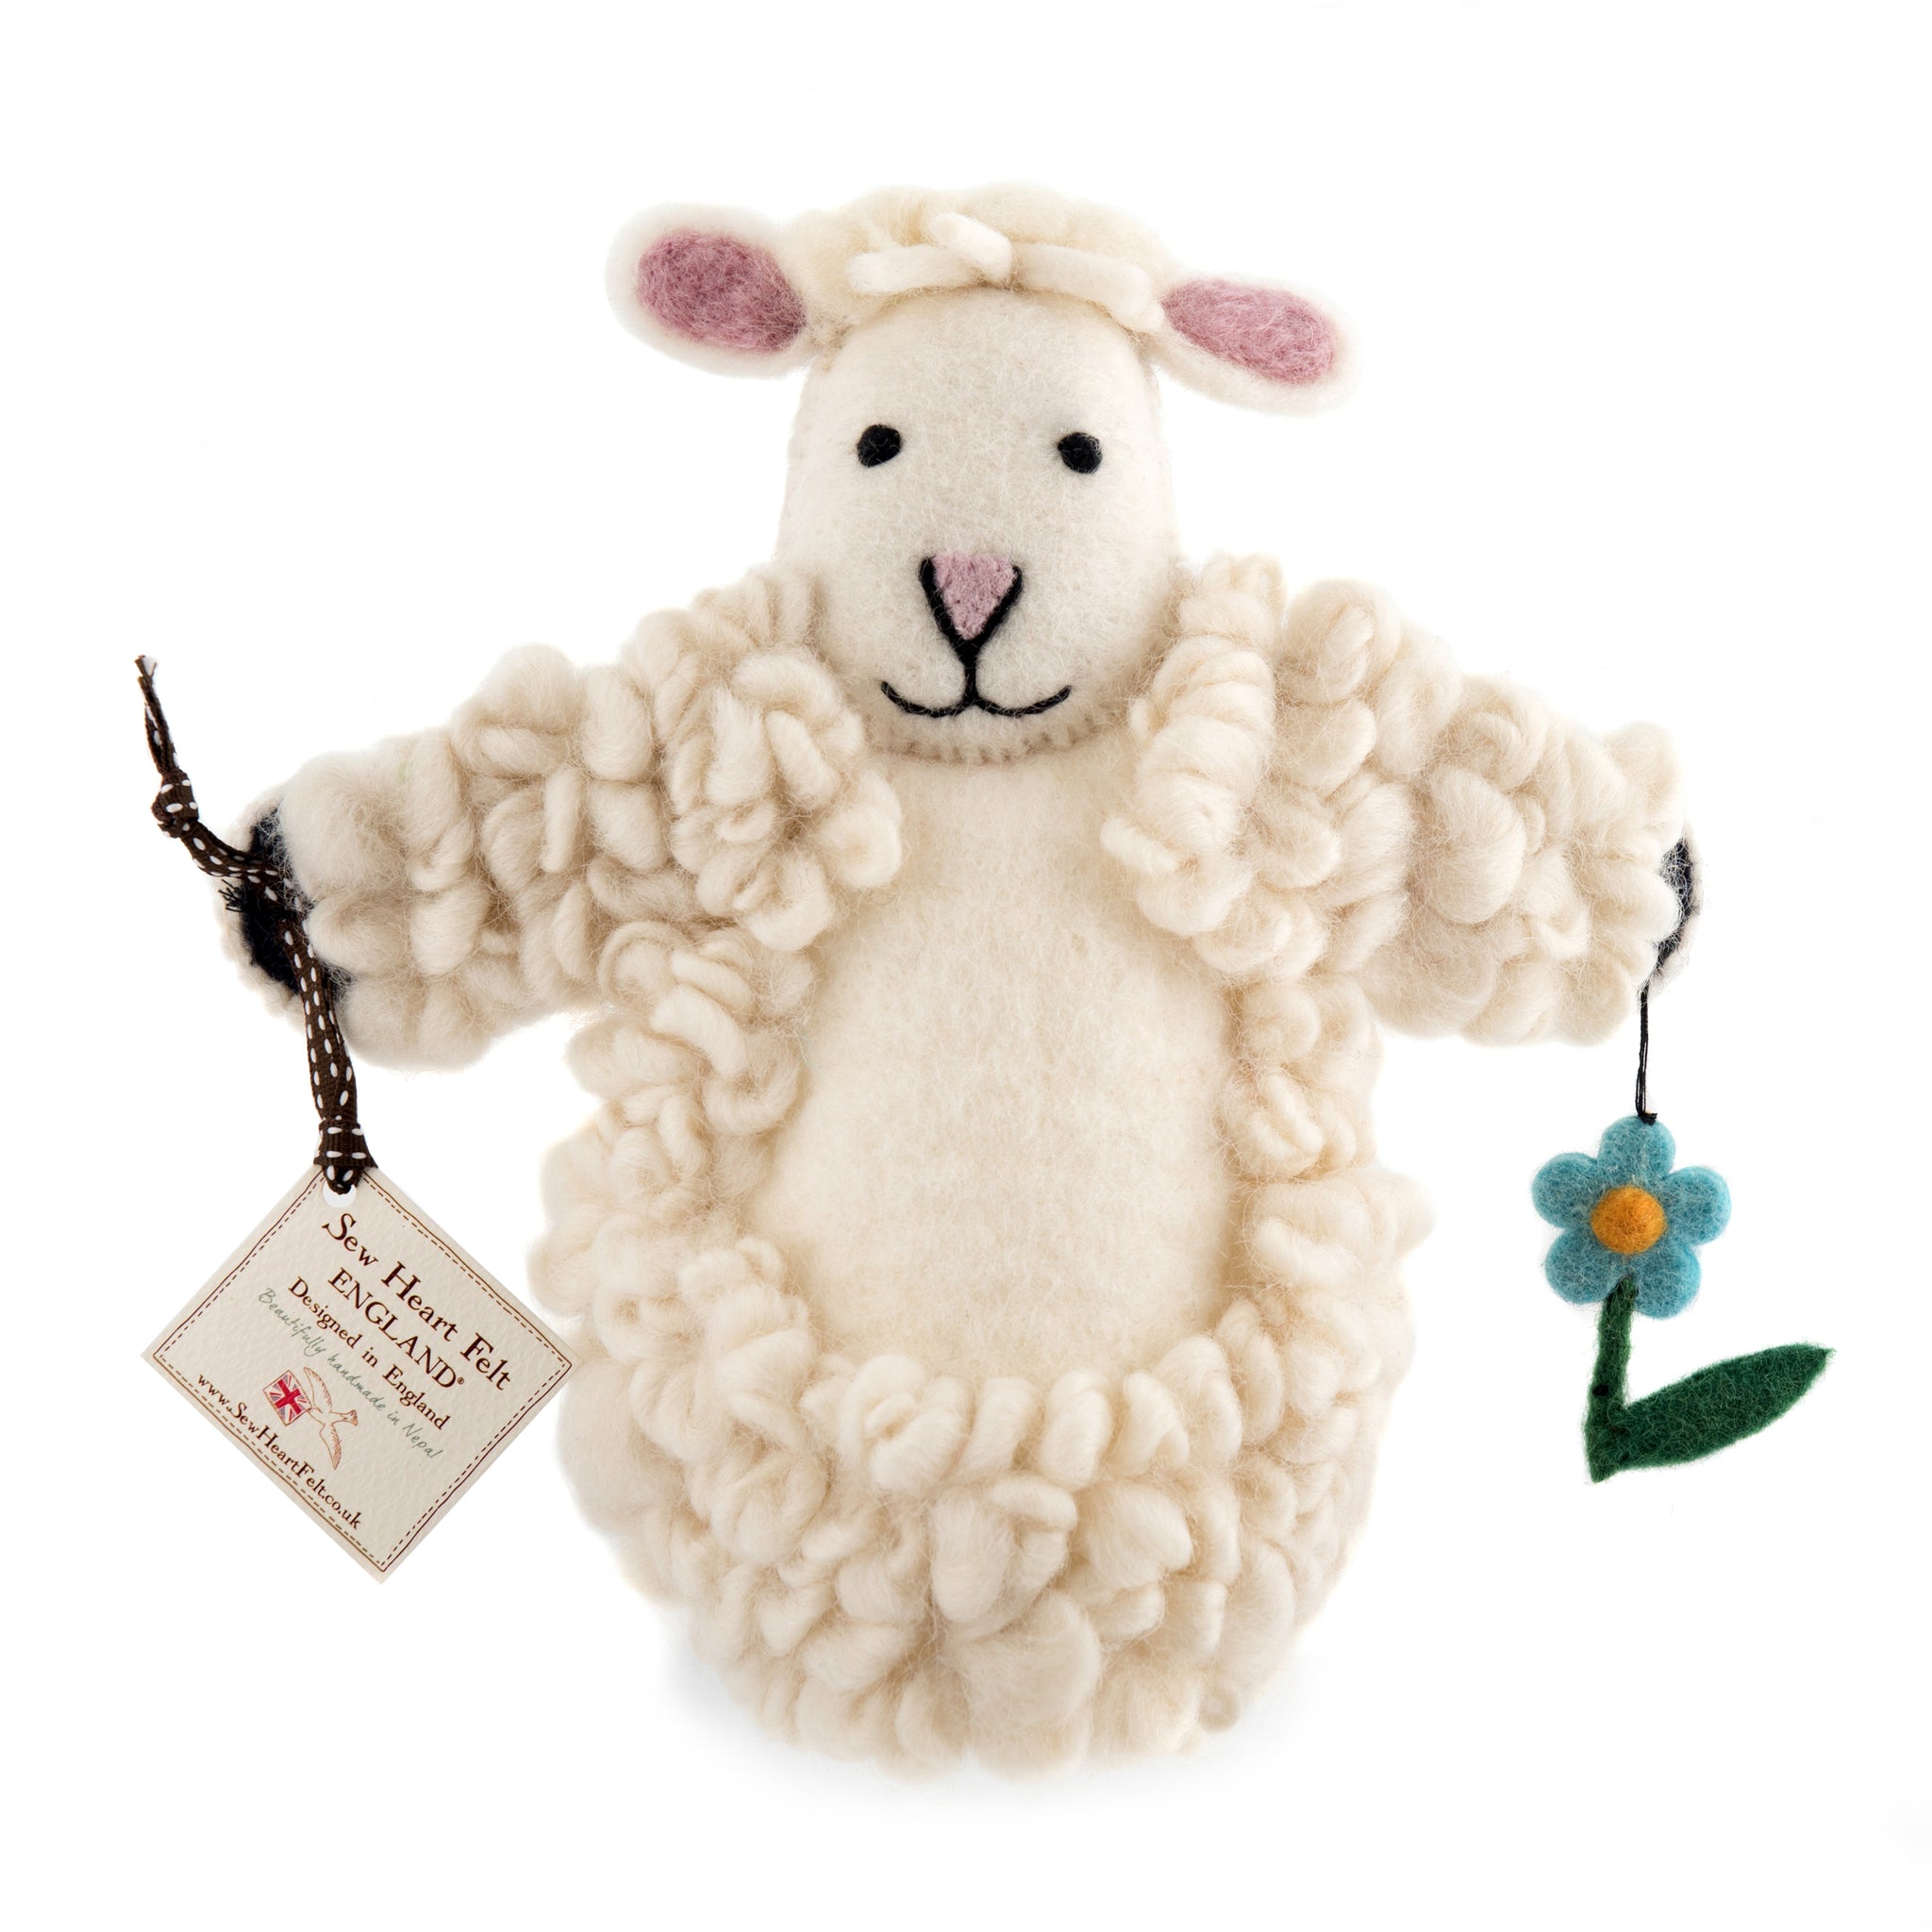 Shirley Sheep Hand Puppet